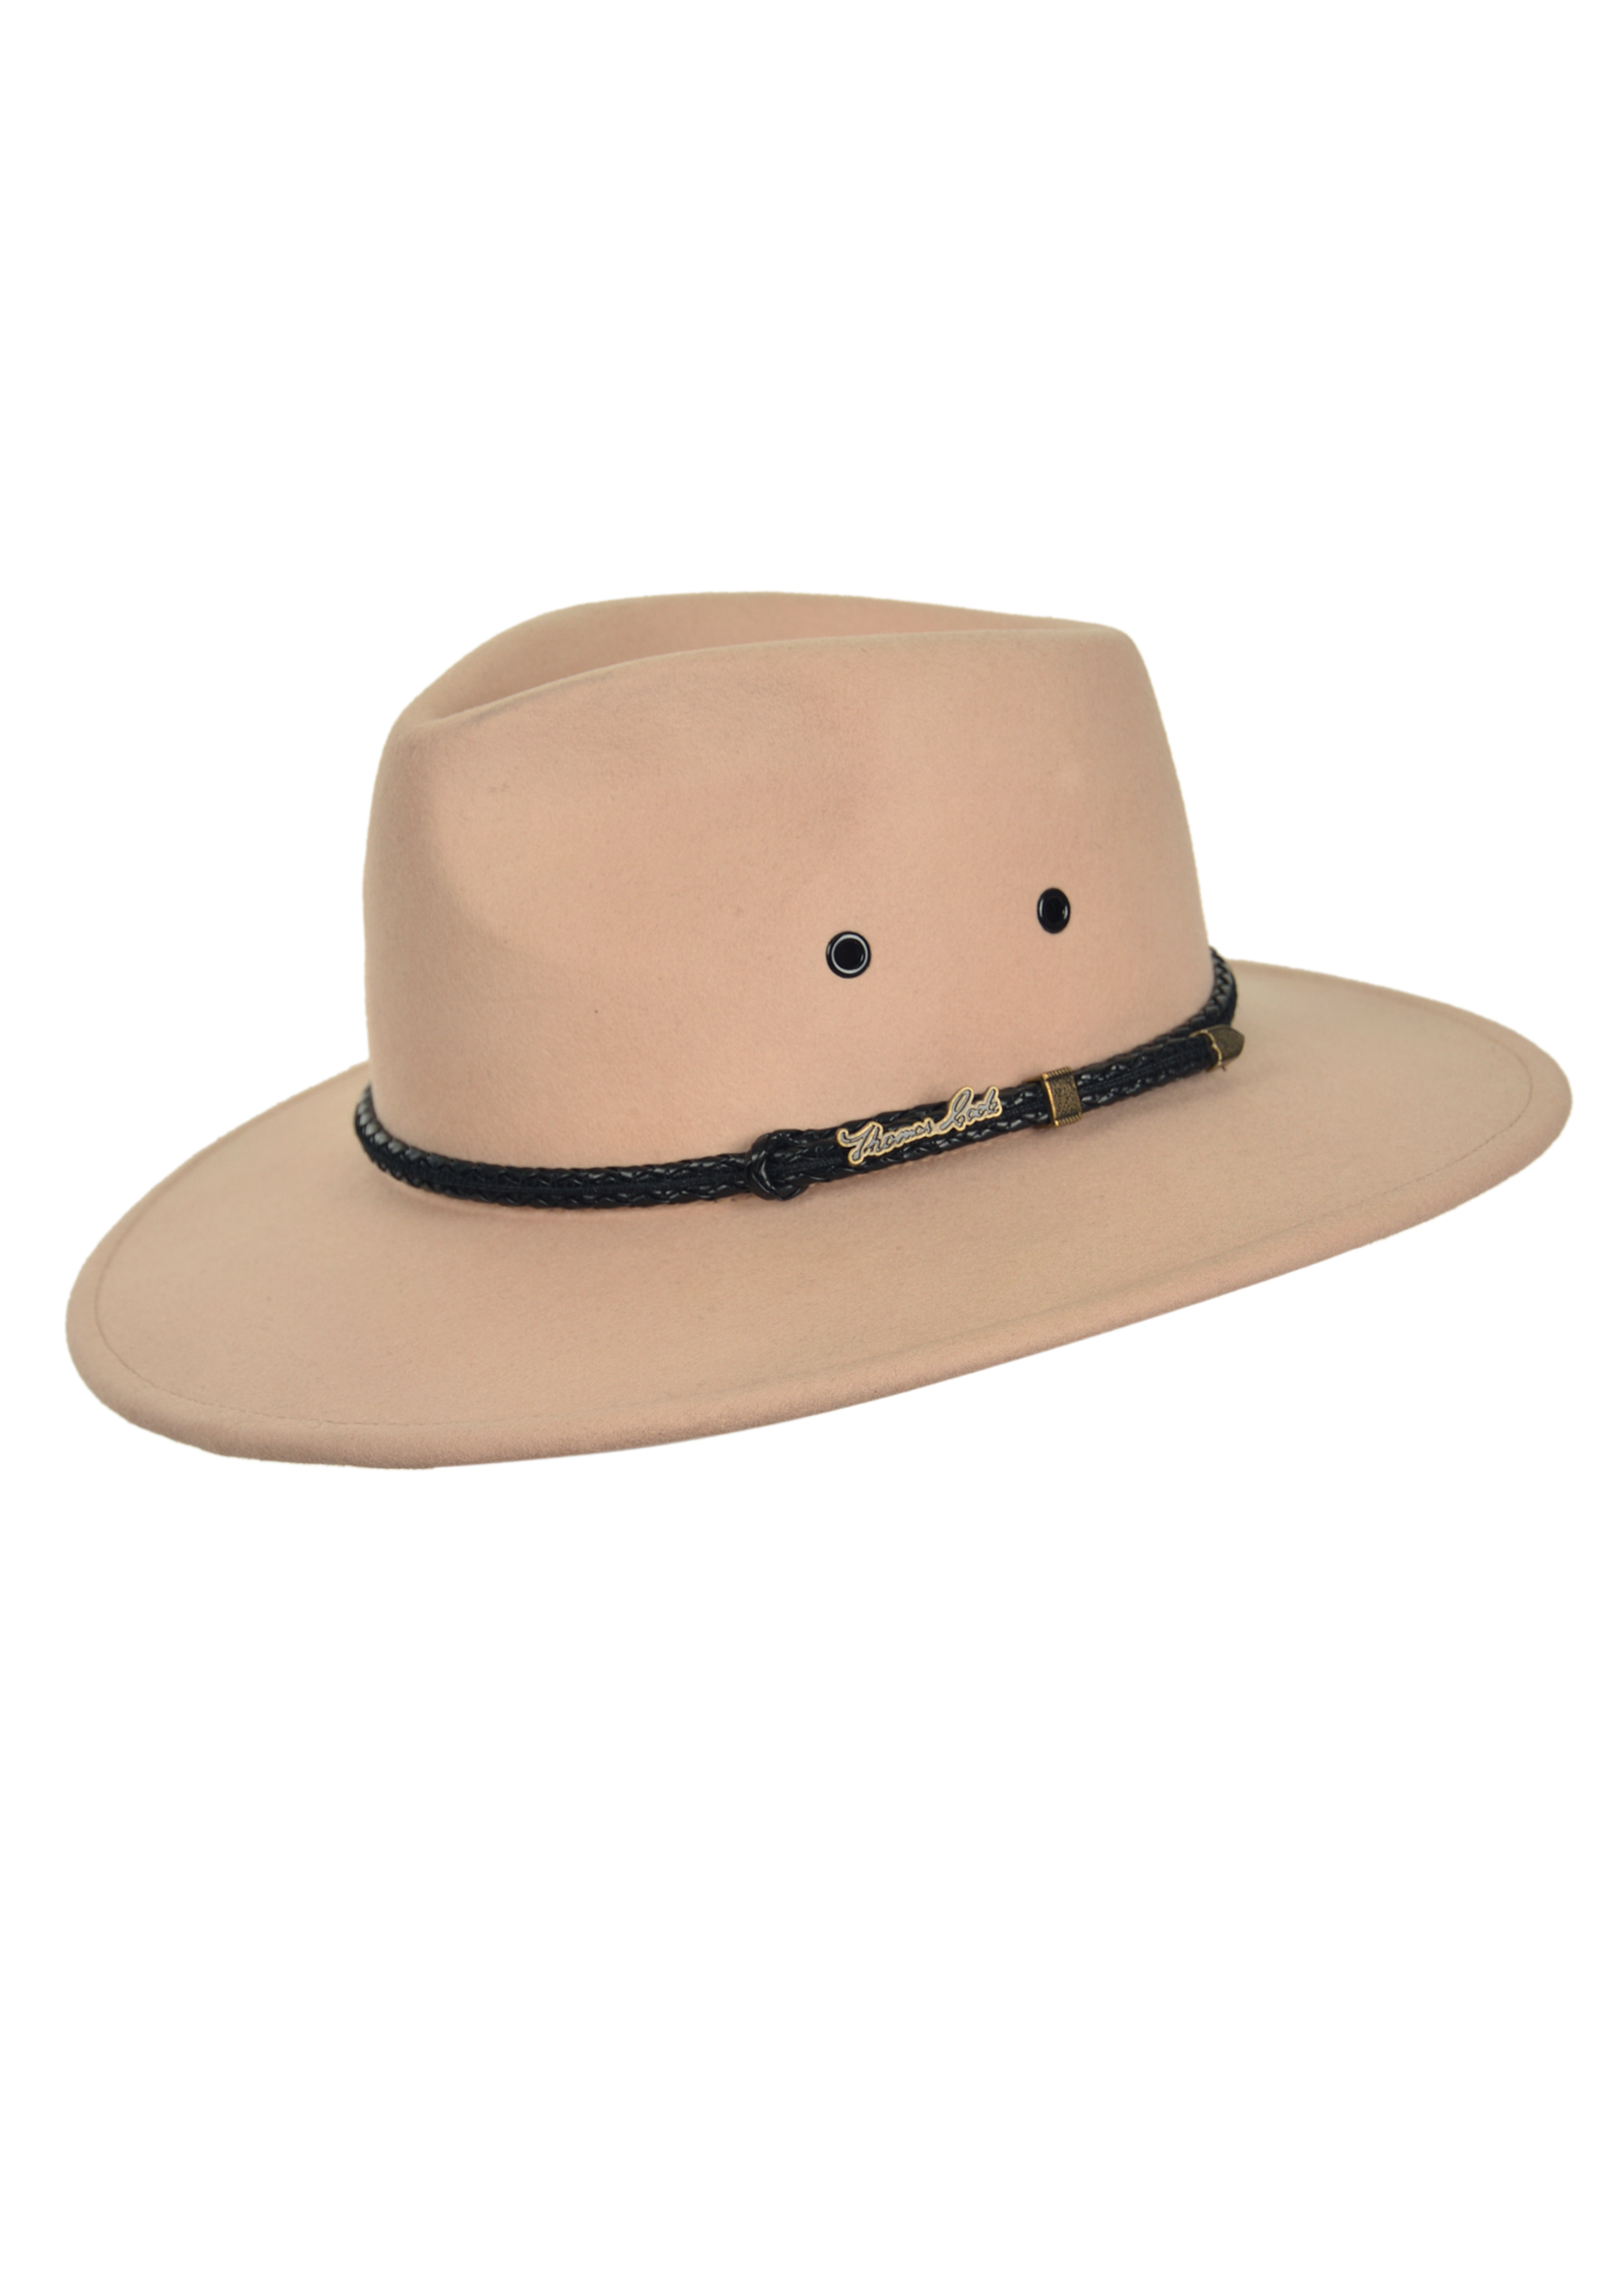 TCP1974002 Thomas Cook Wanderer Crushable Hat